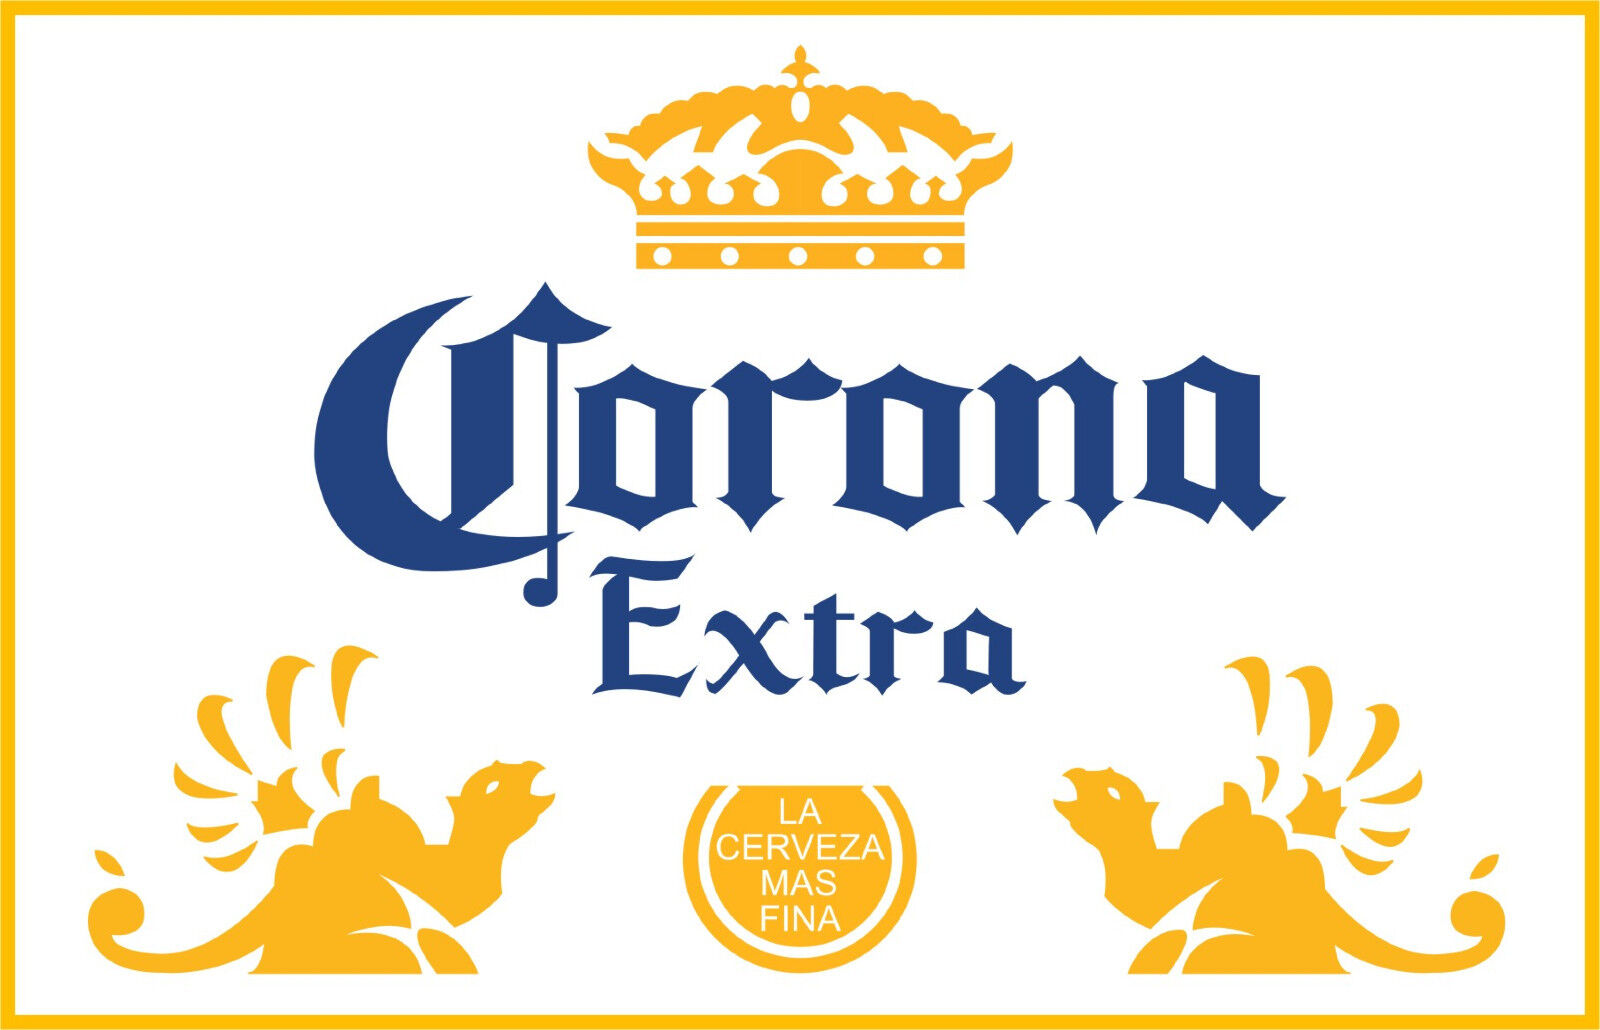 Corona Extra Vinyl Sticker Decal 18